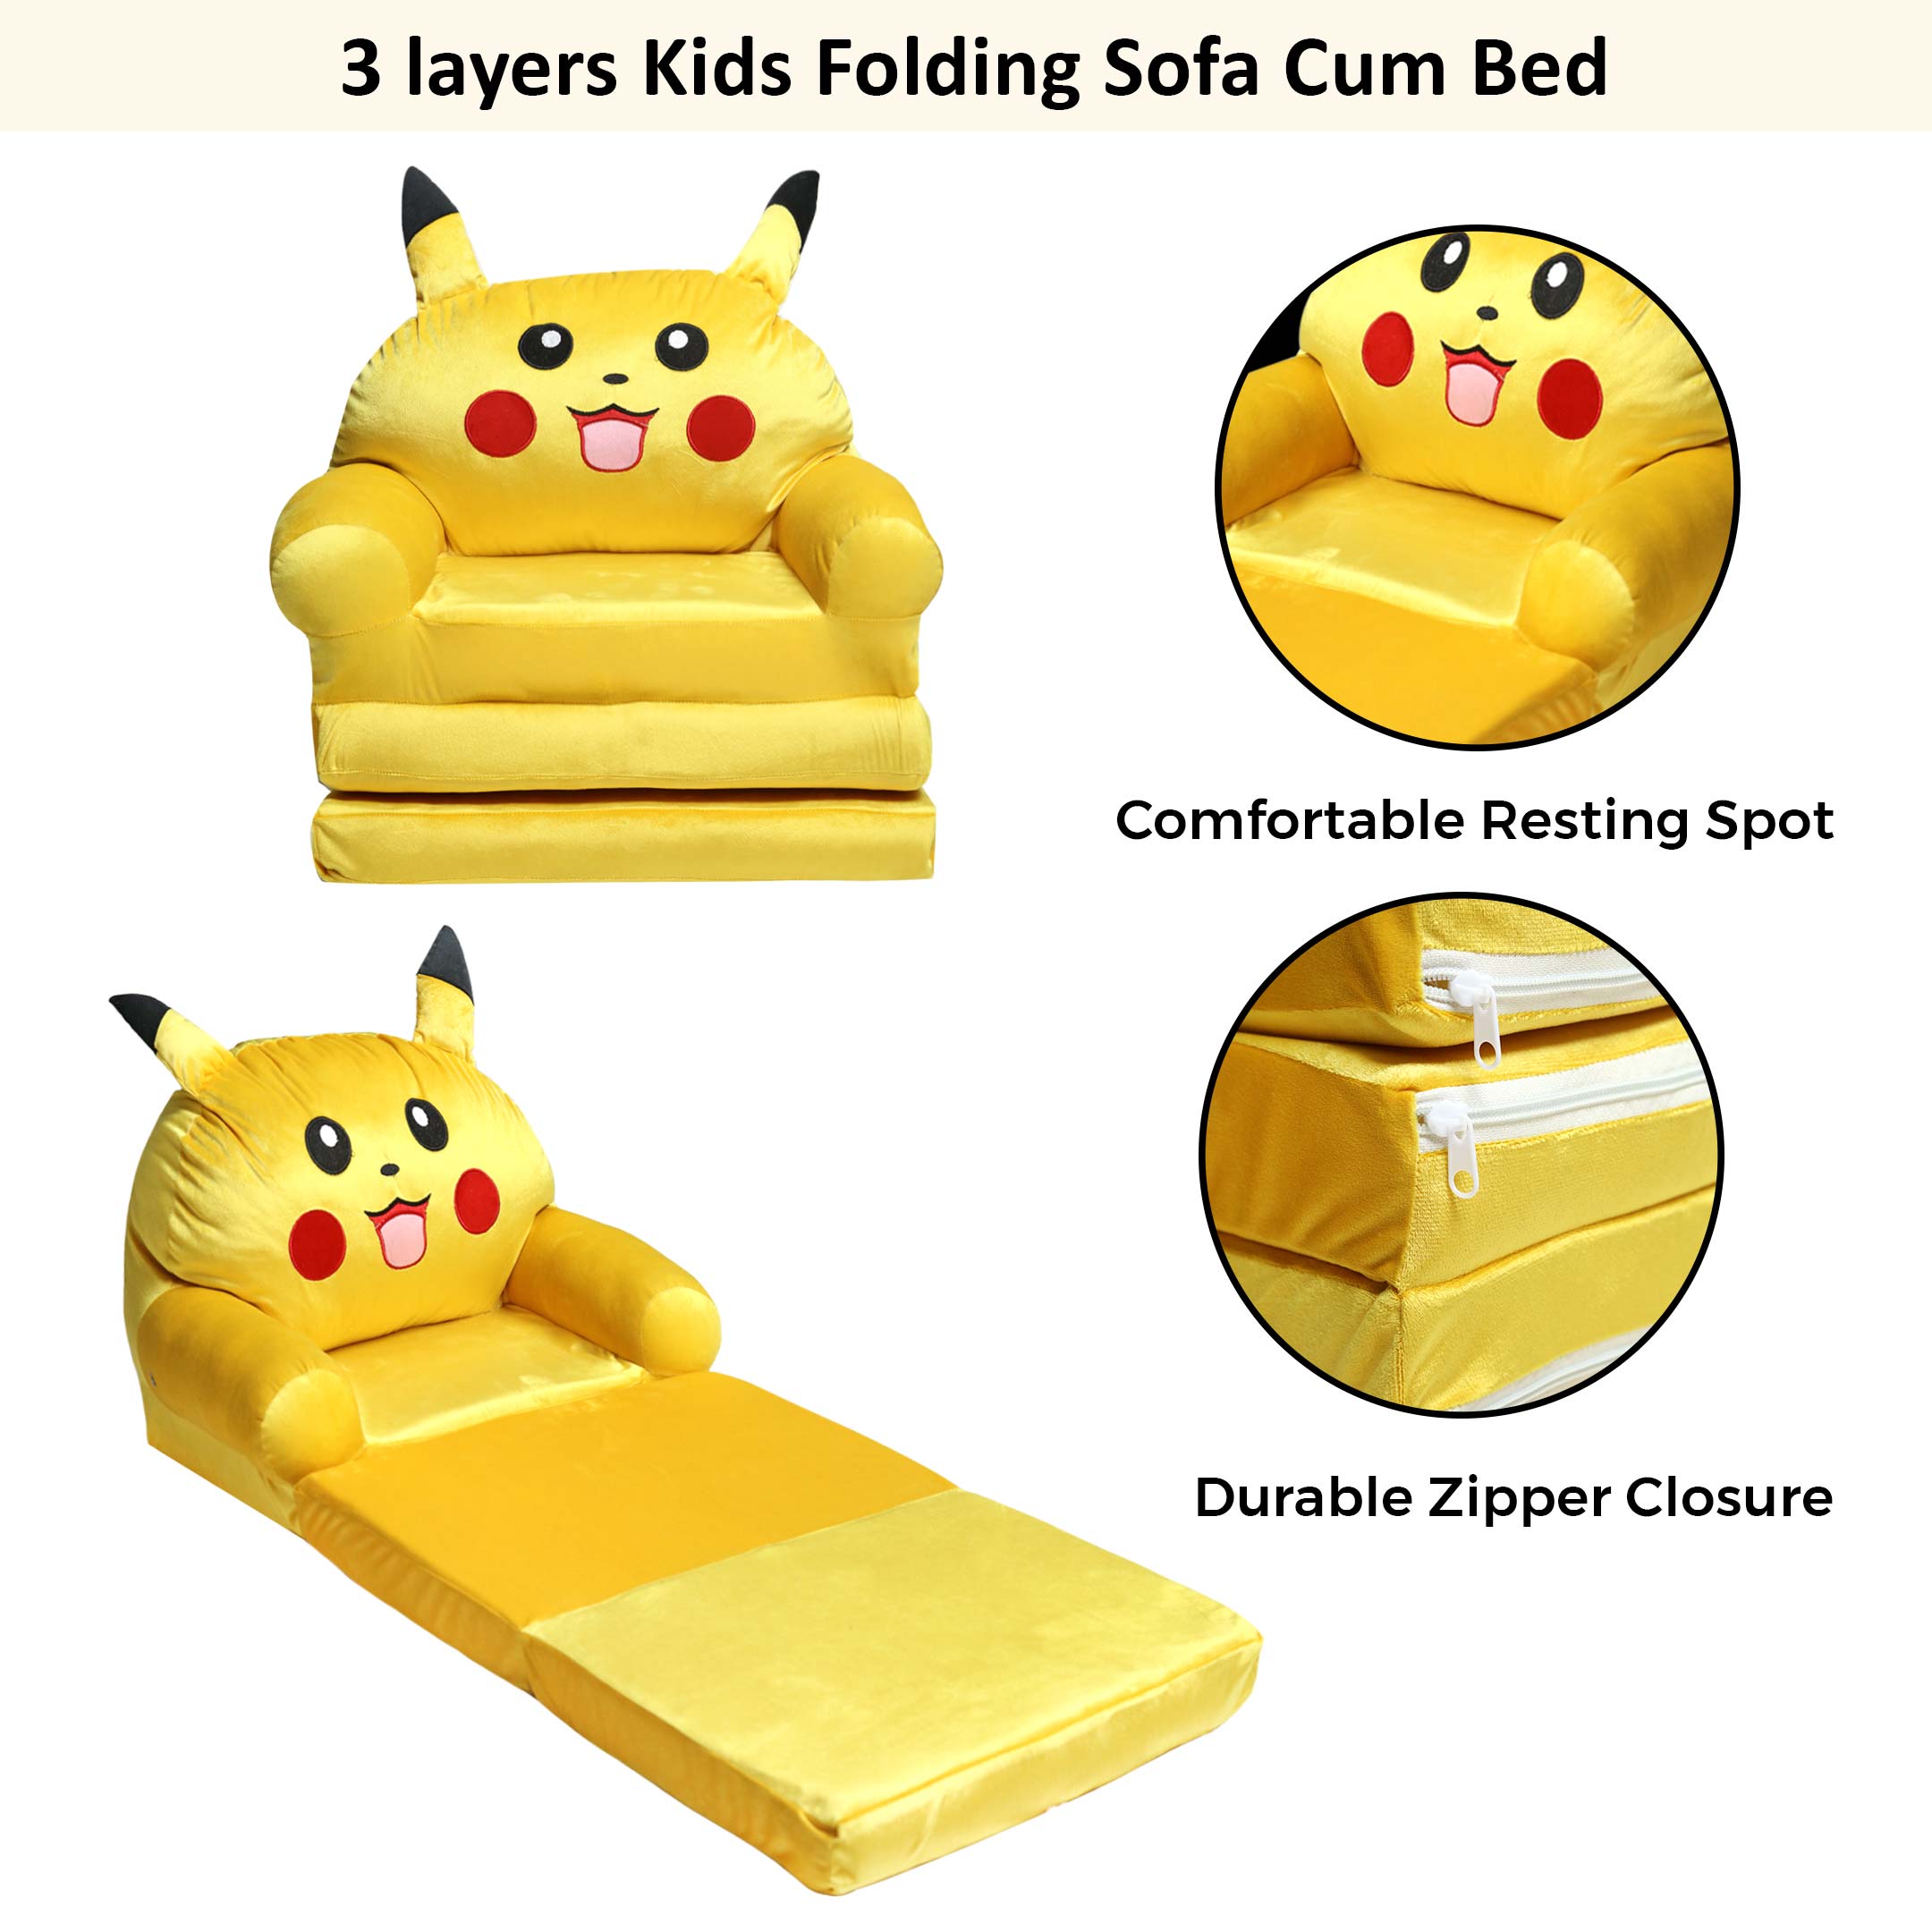 3 layers Kids Folding Sofa Cum Bed